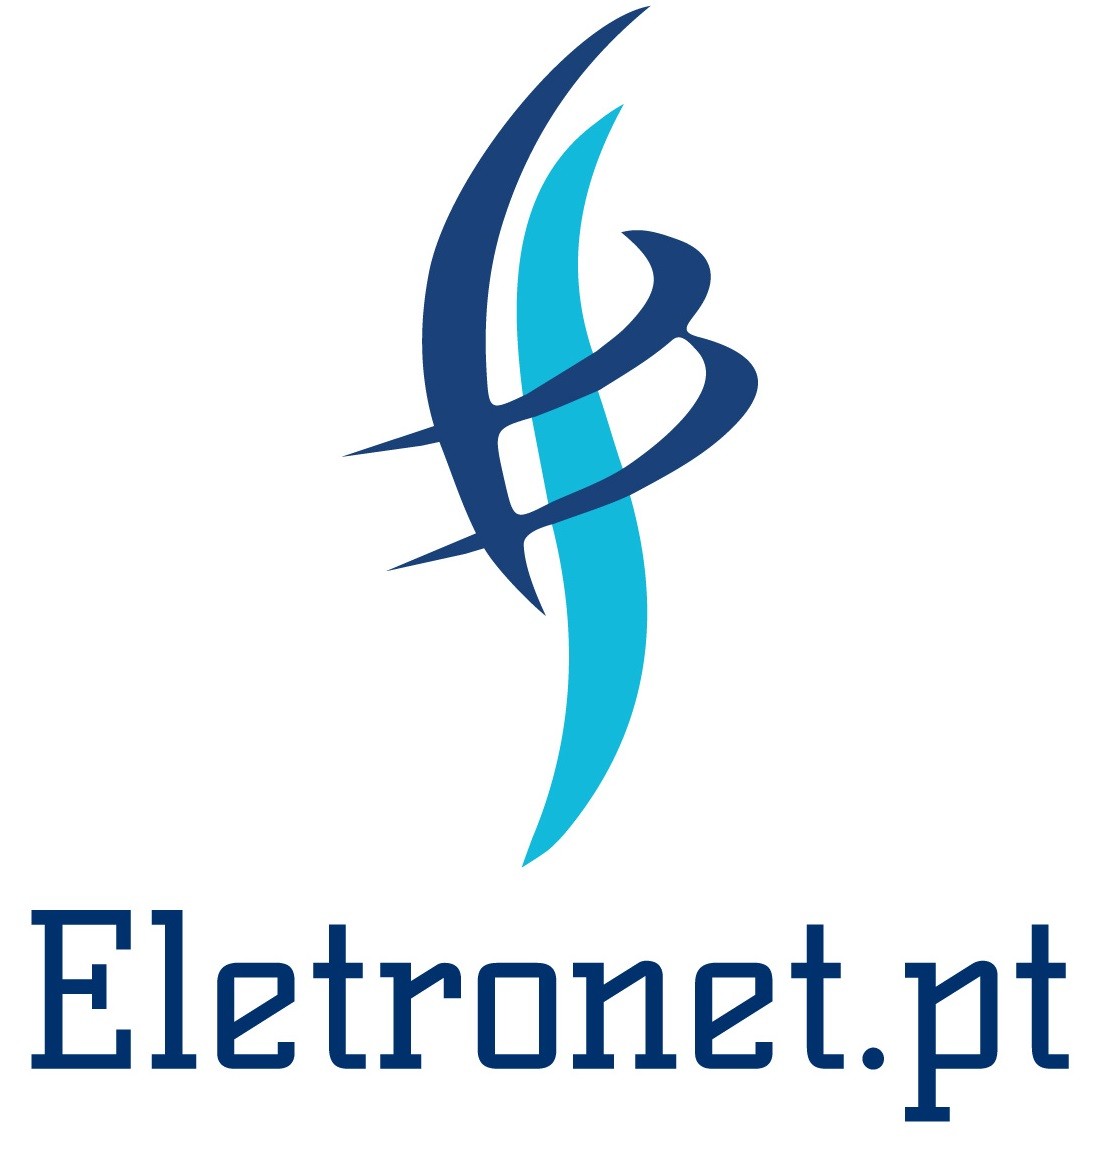 Eletronet.pt